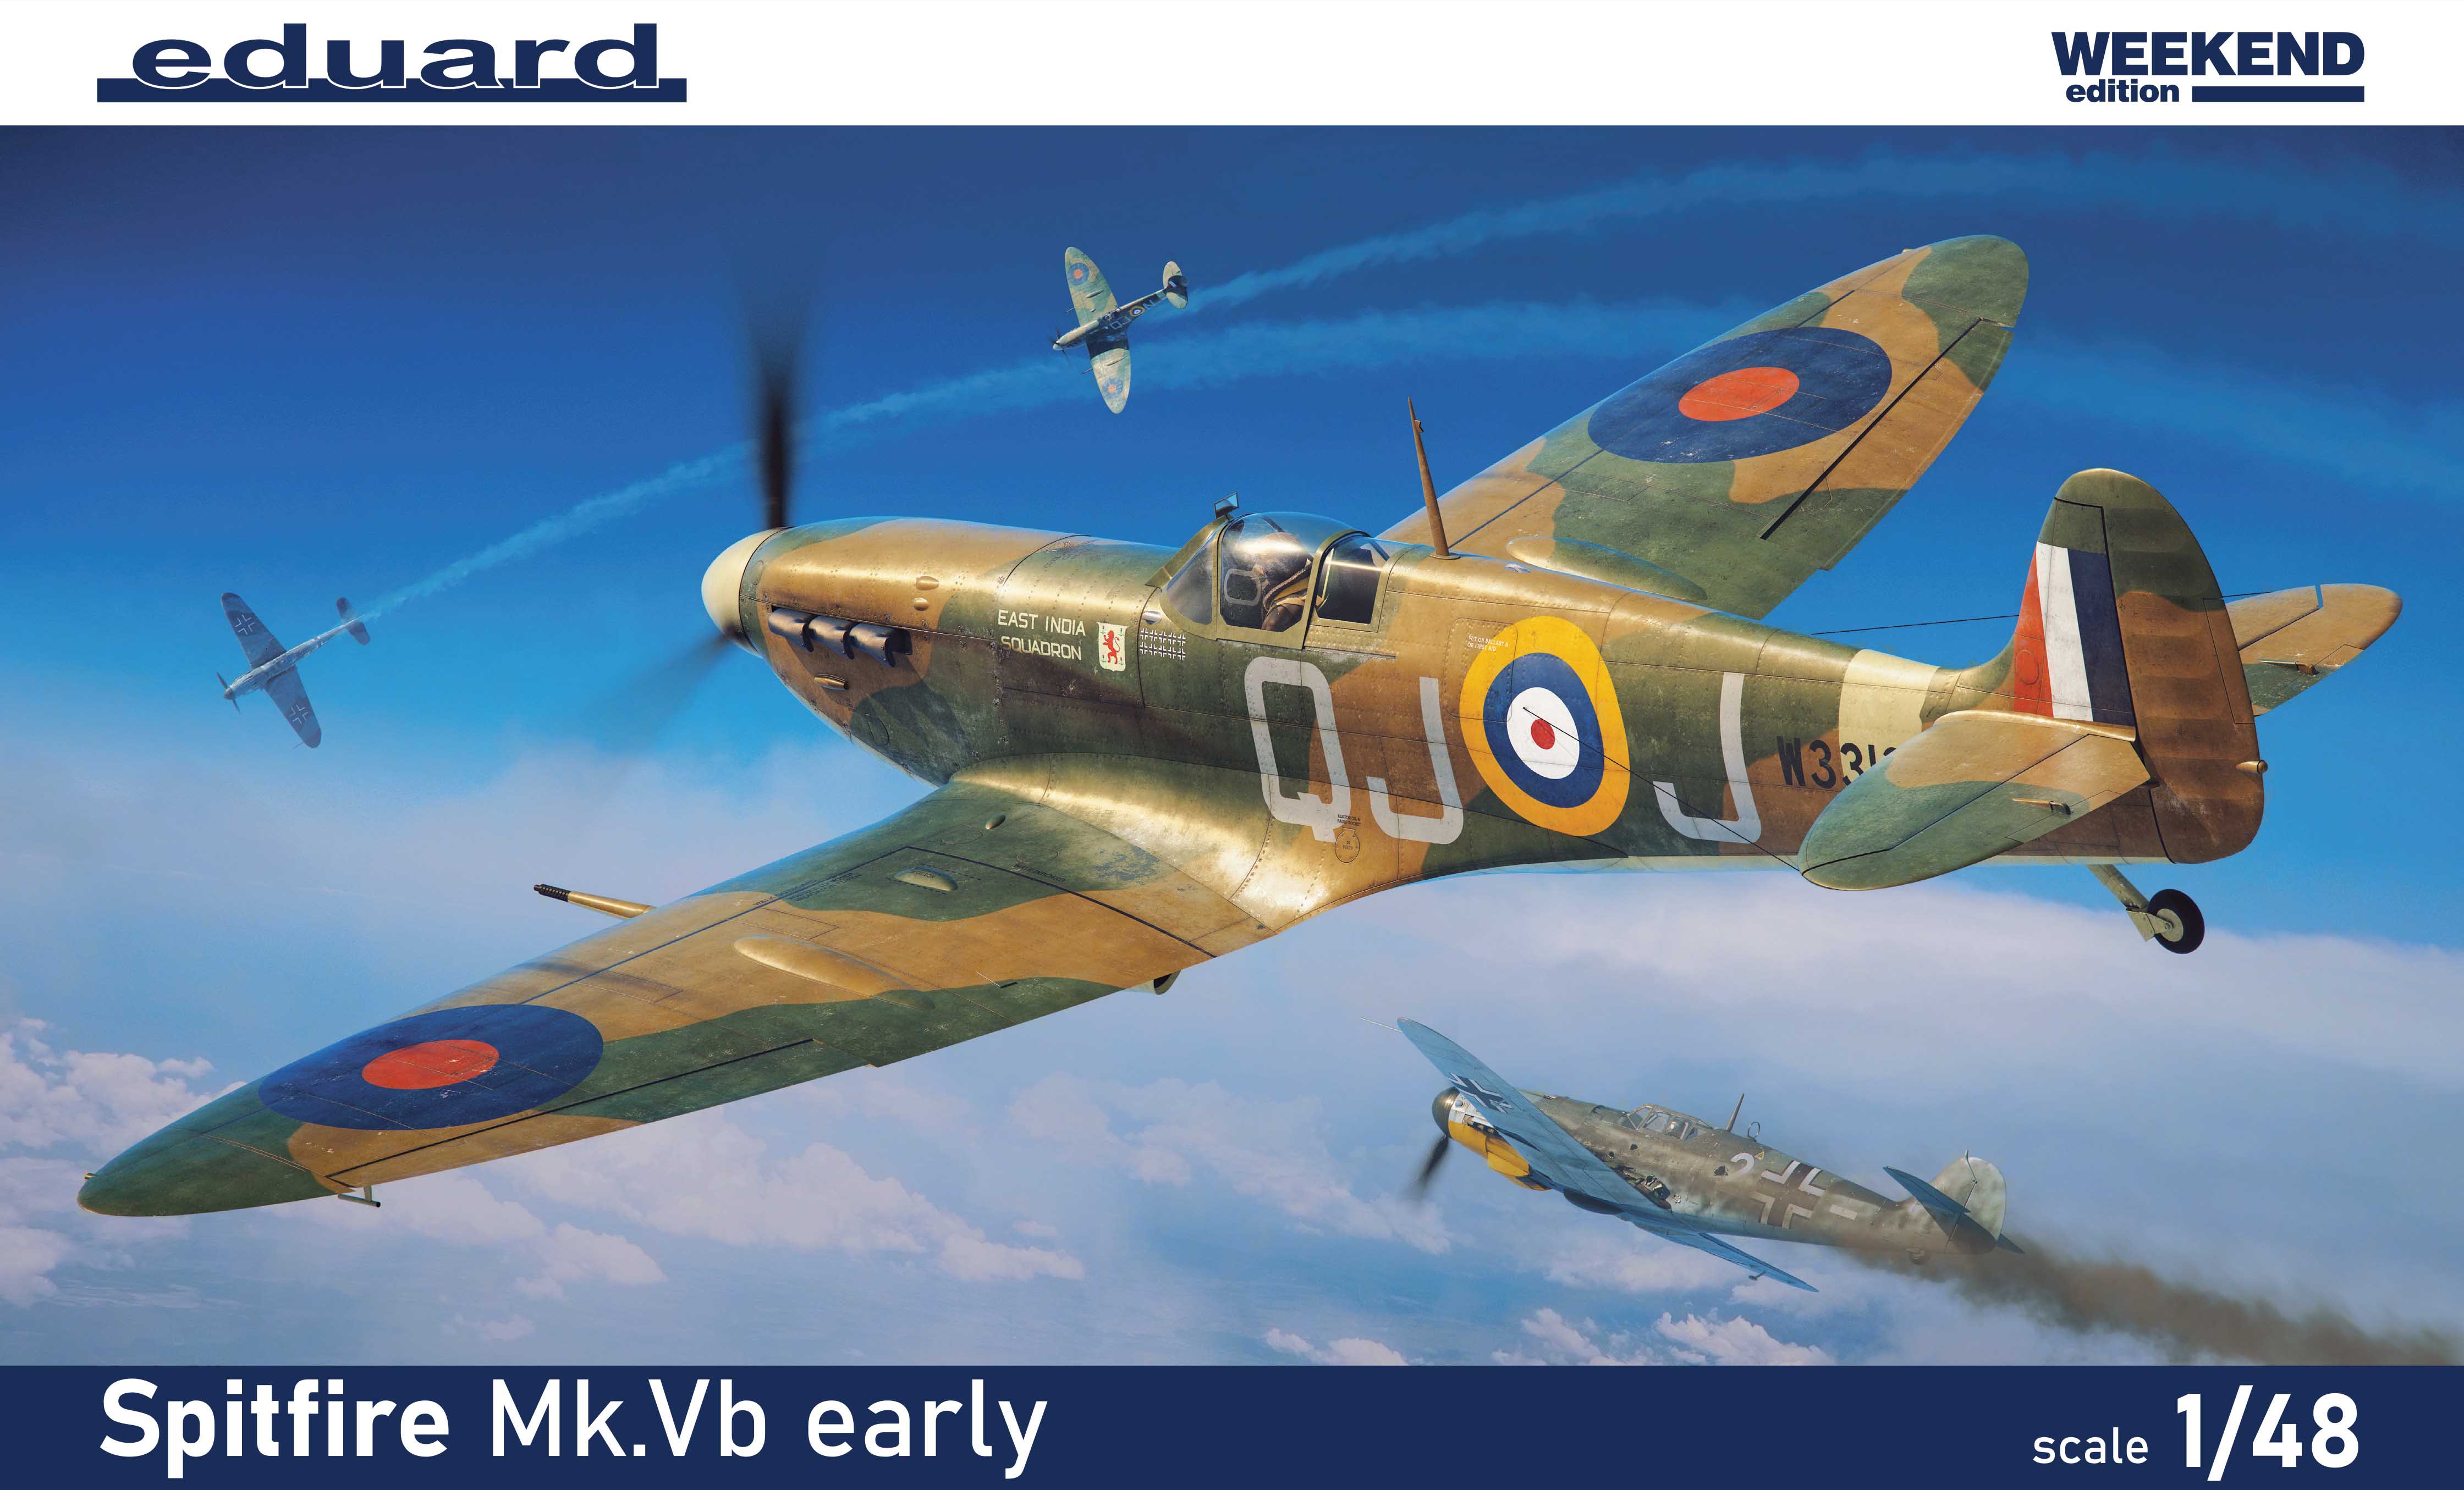 1/48 Spitfire Mk.Vb early (Weekend)